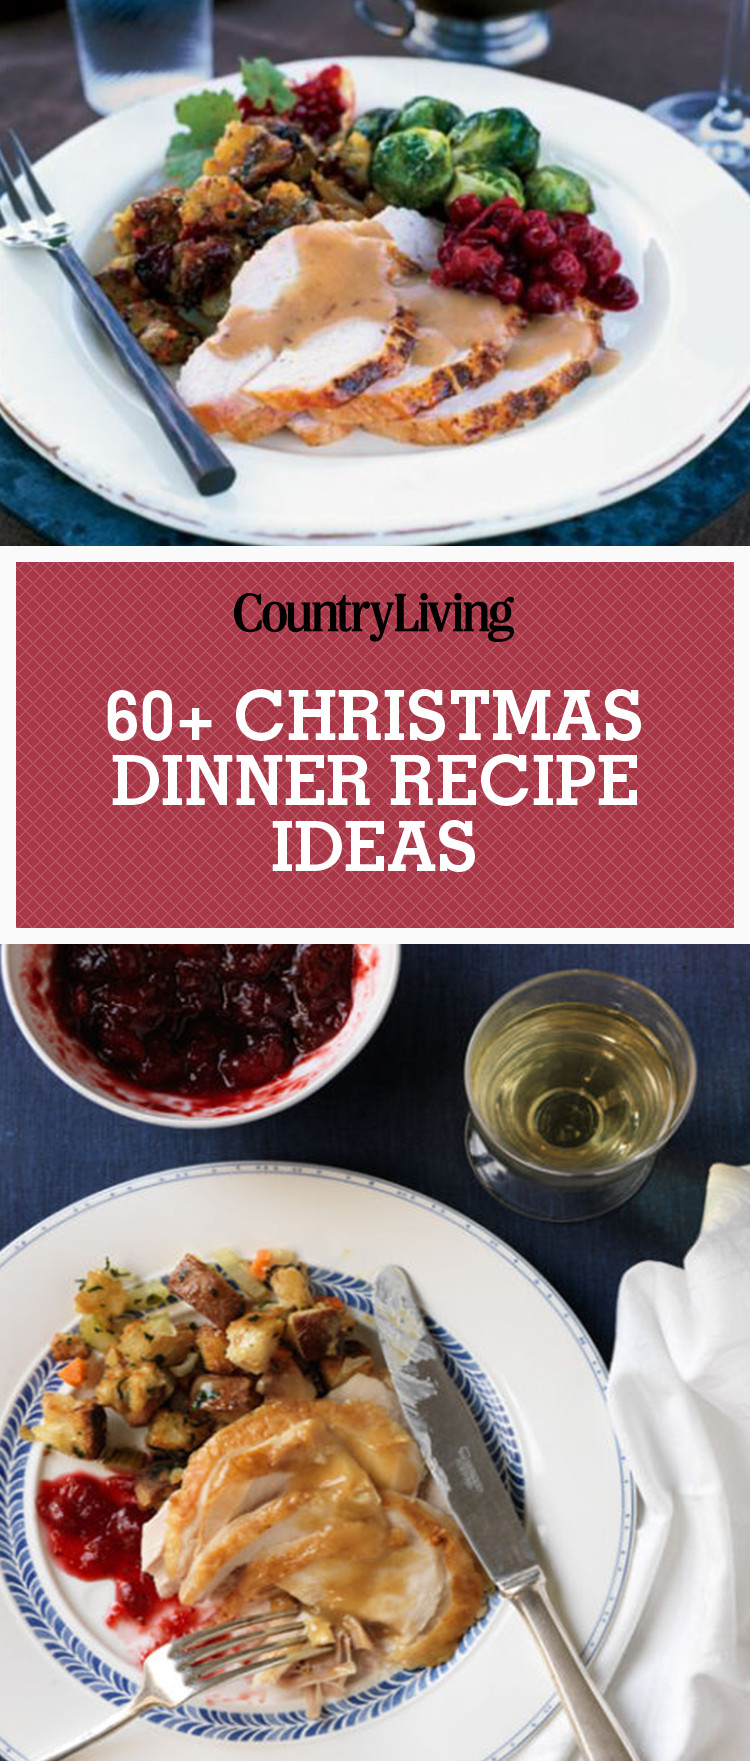 Xmas Dinner Ideas
 70 Easy Christmas Dinner Ideas Best Holiday Meal Recipes